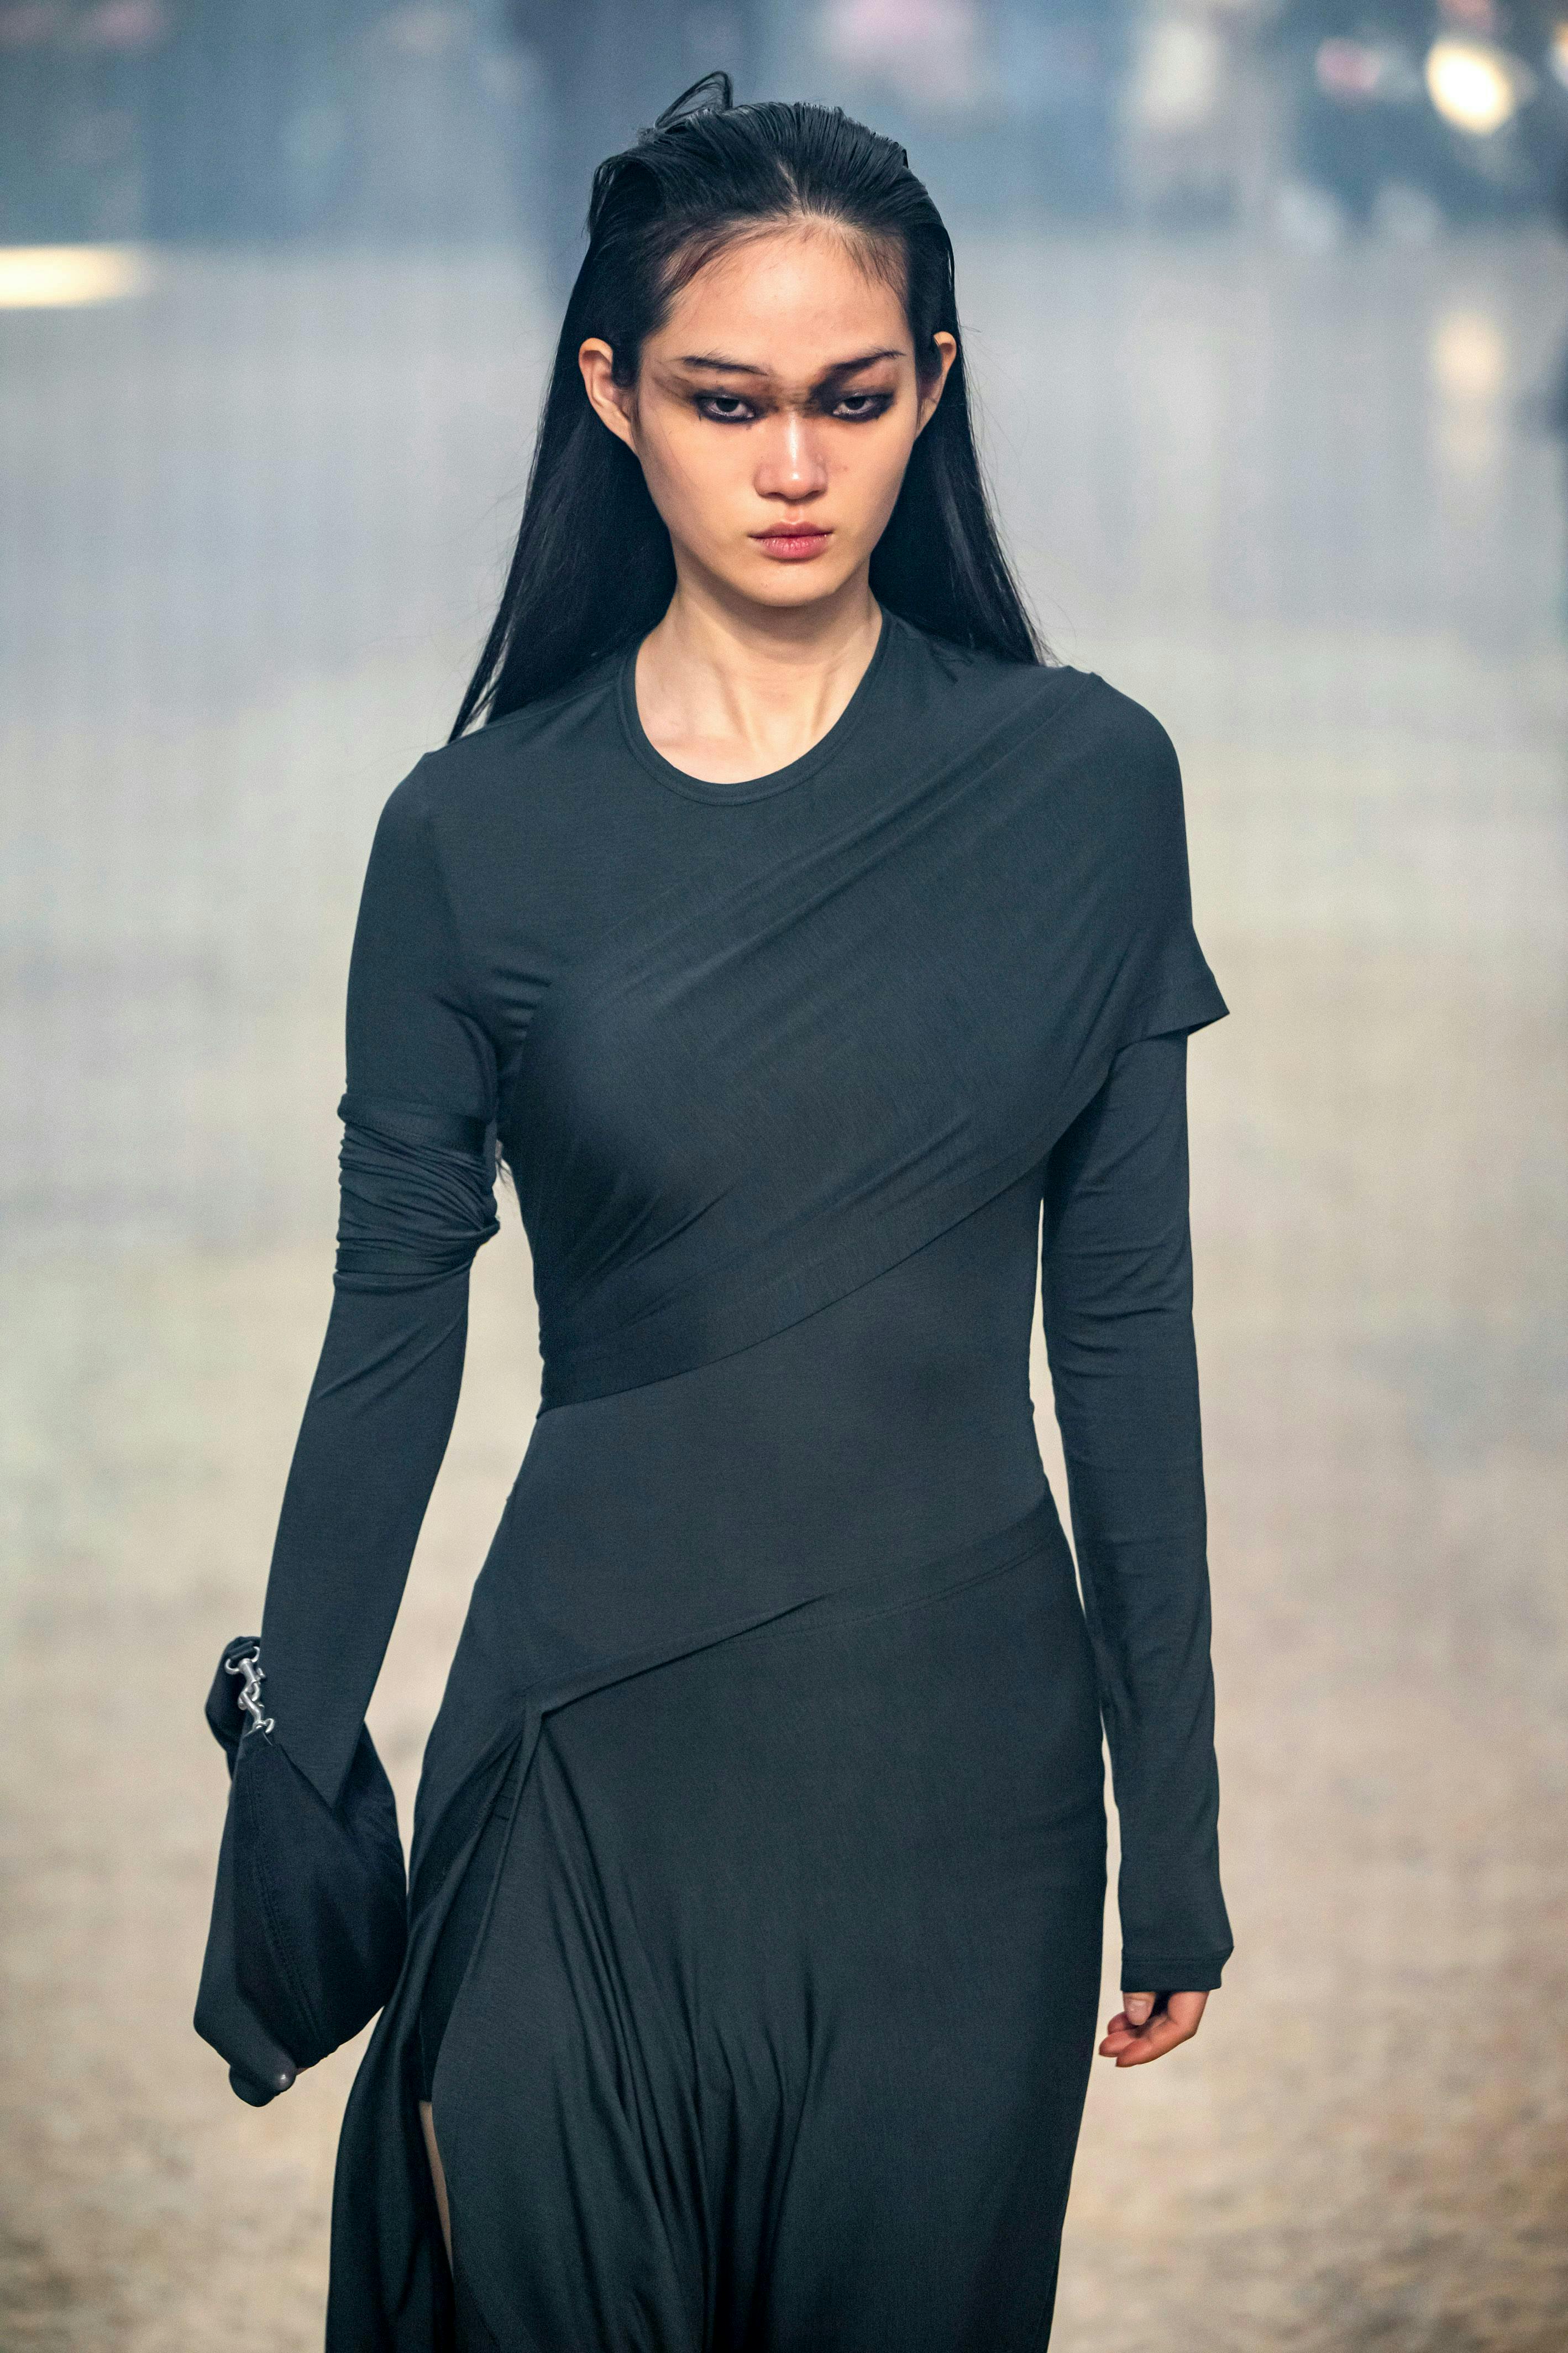 new york long sleeve sleeve dress black hair person adult female woman formal wear fashion